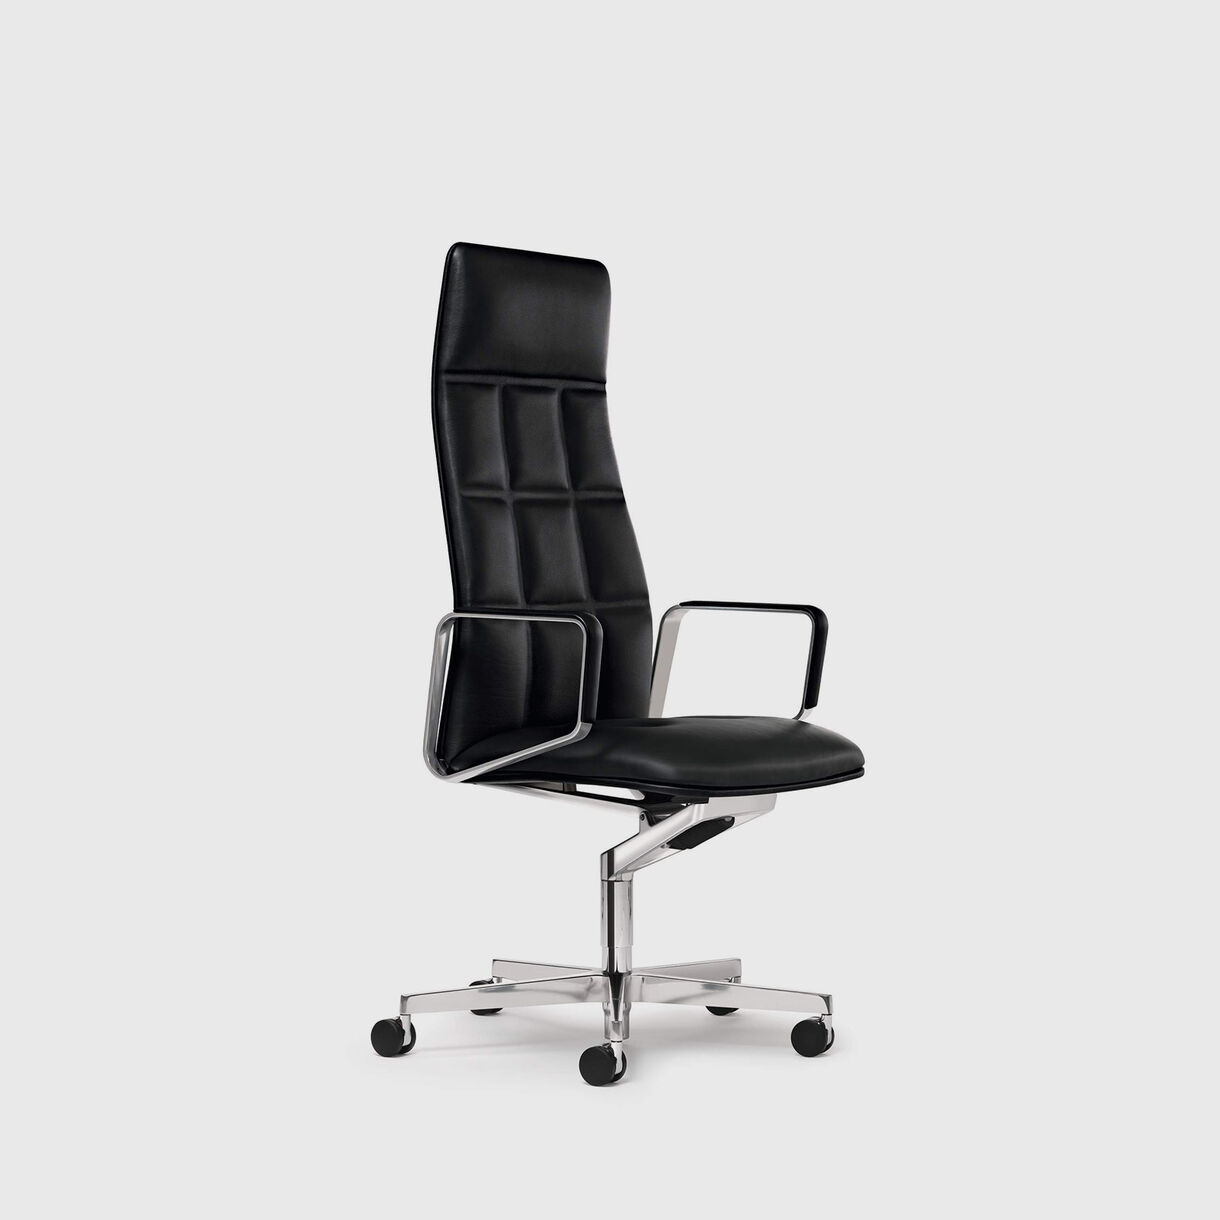 Leadchair Executive Swivel Chair, High Back